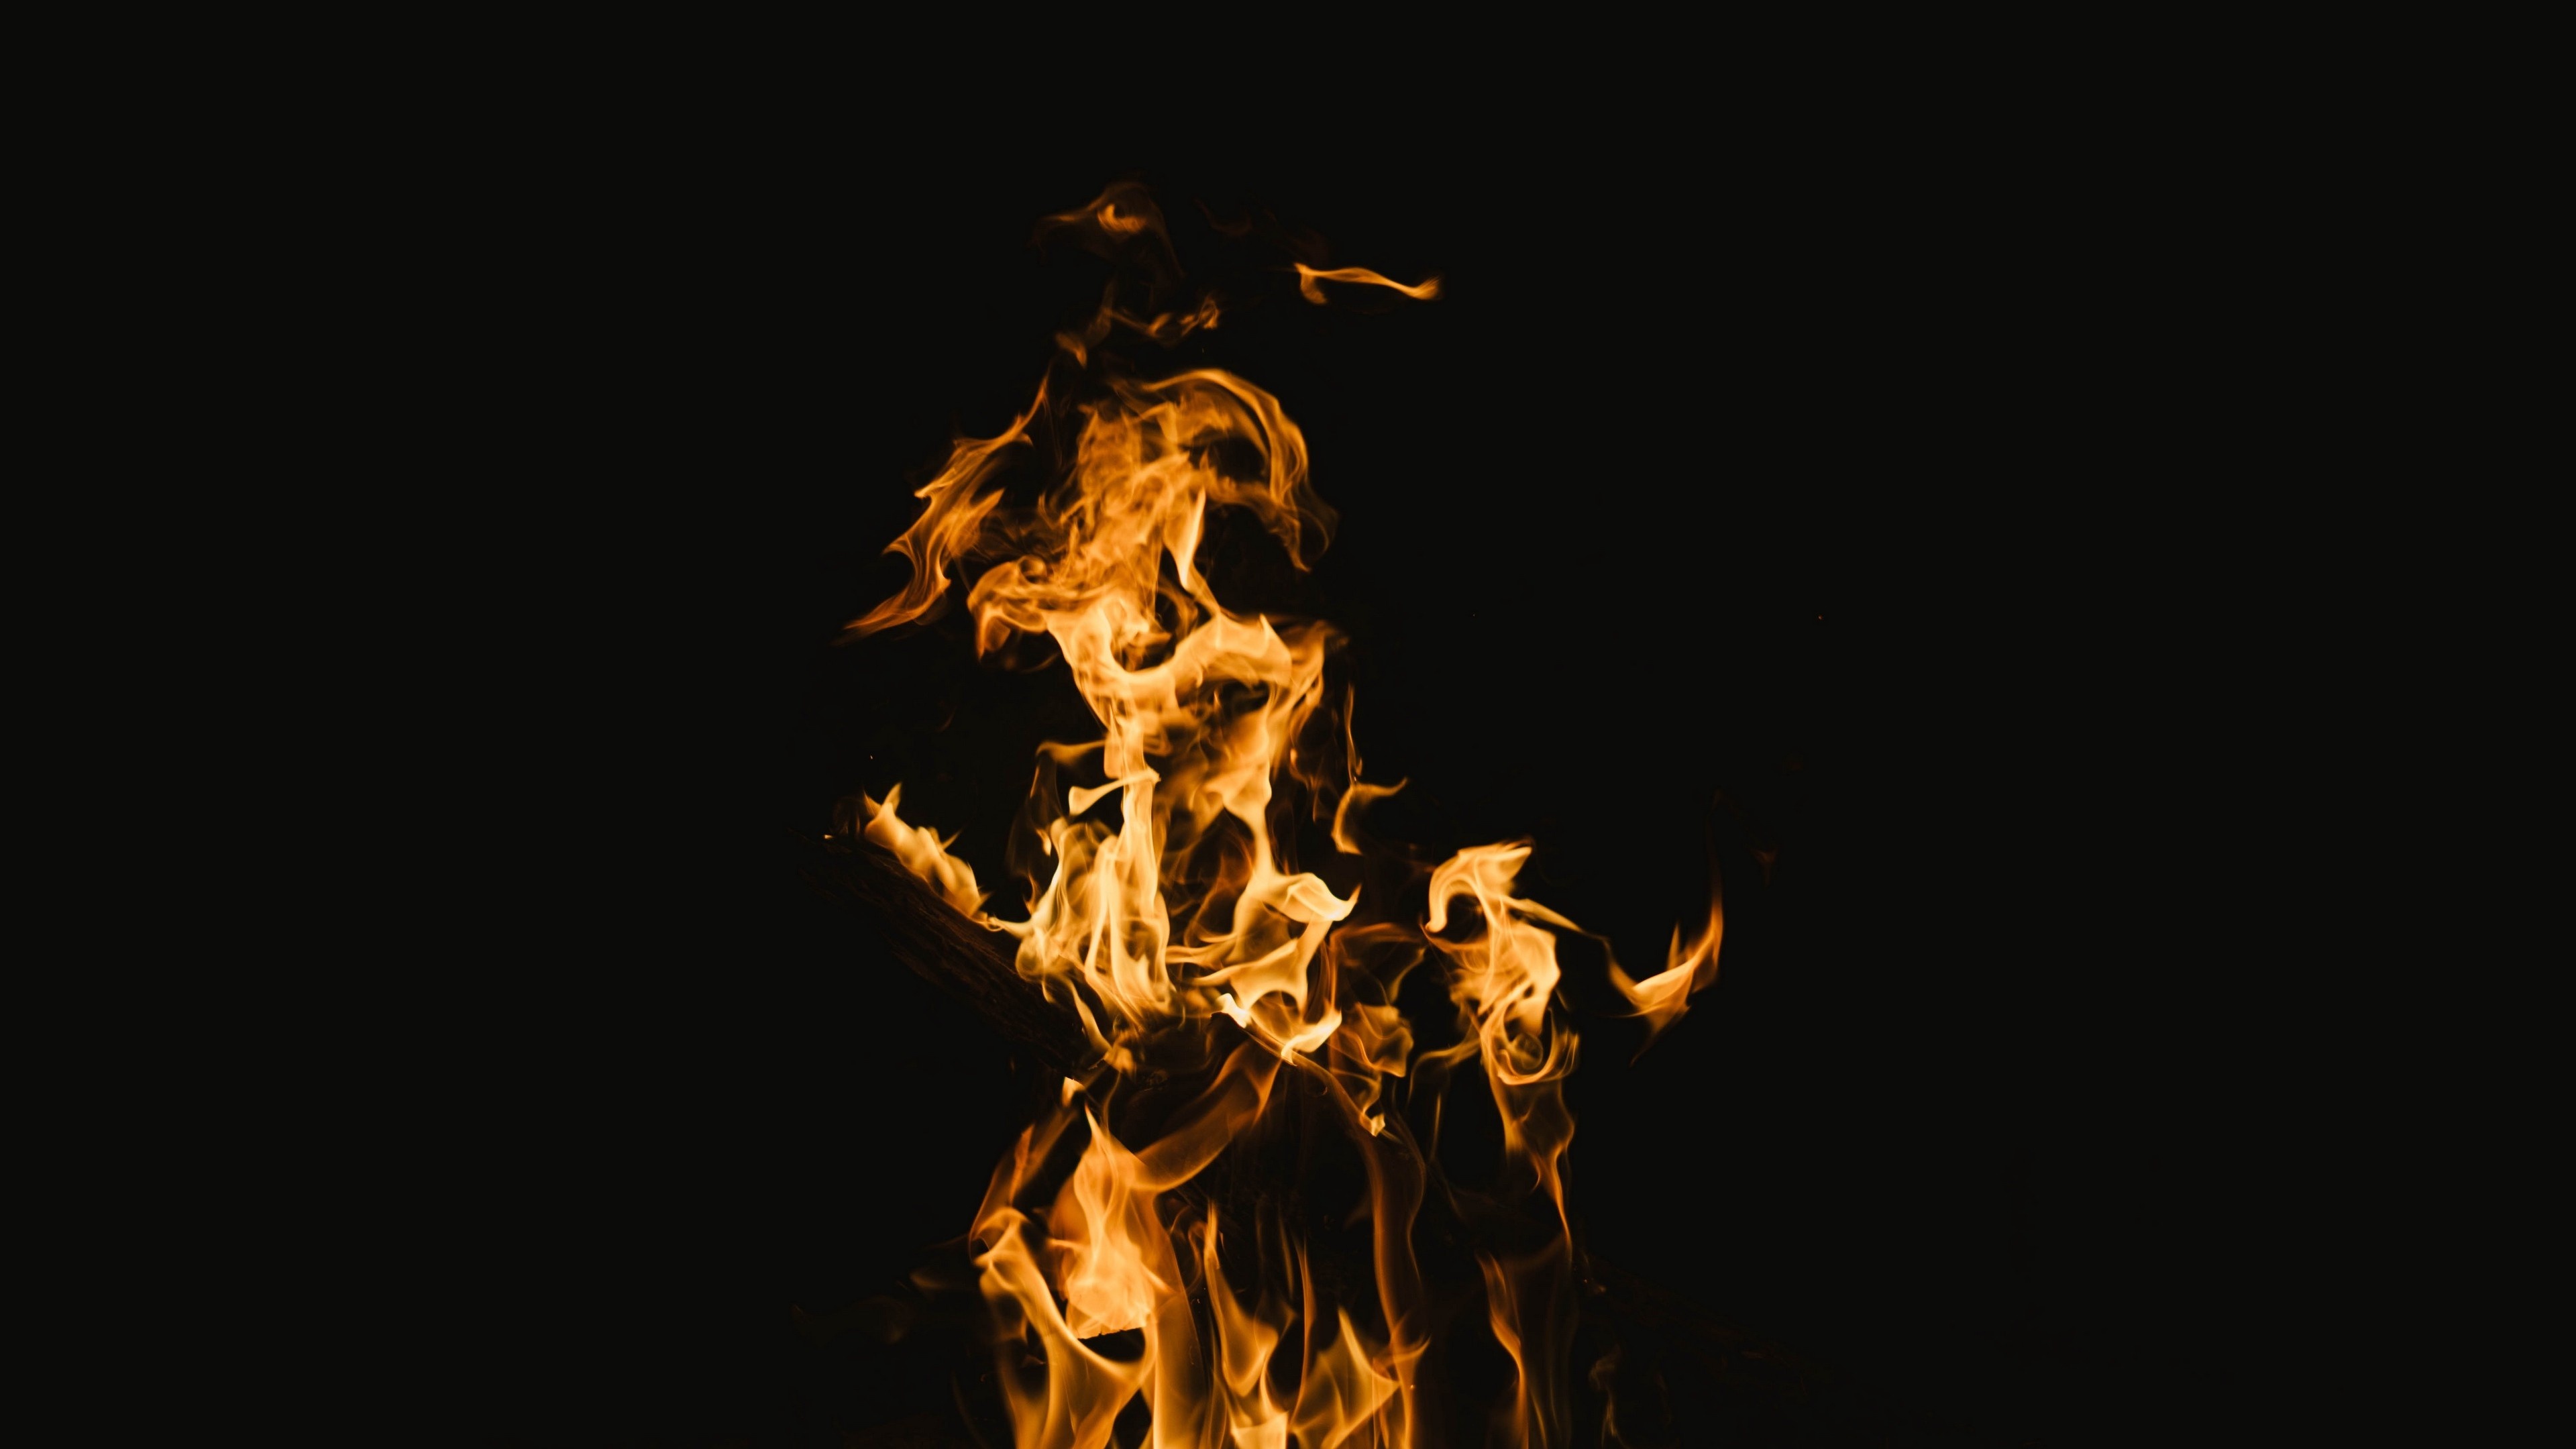 4K fire artwork, Flame burn wallpaper, High-definition fire imagery, Premium fire visuals, Striking fire scenes, 3840x2160 4K Desktop